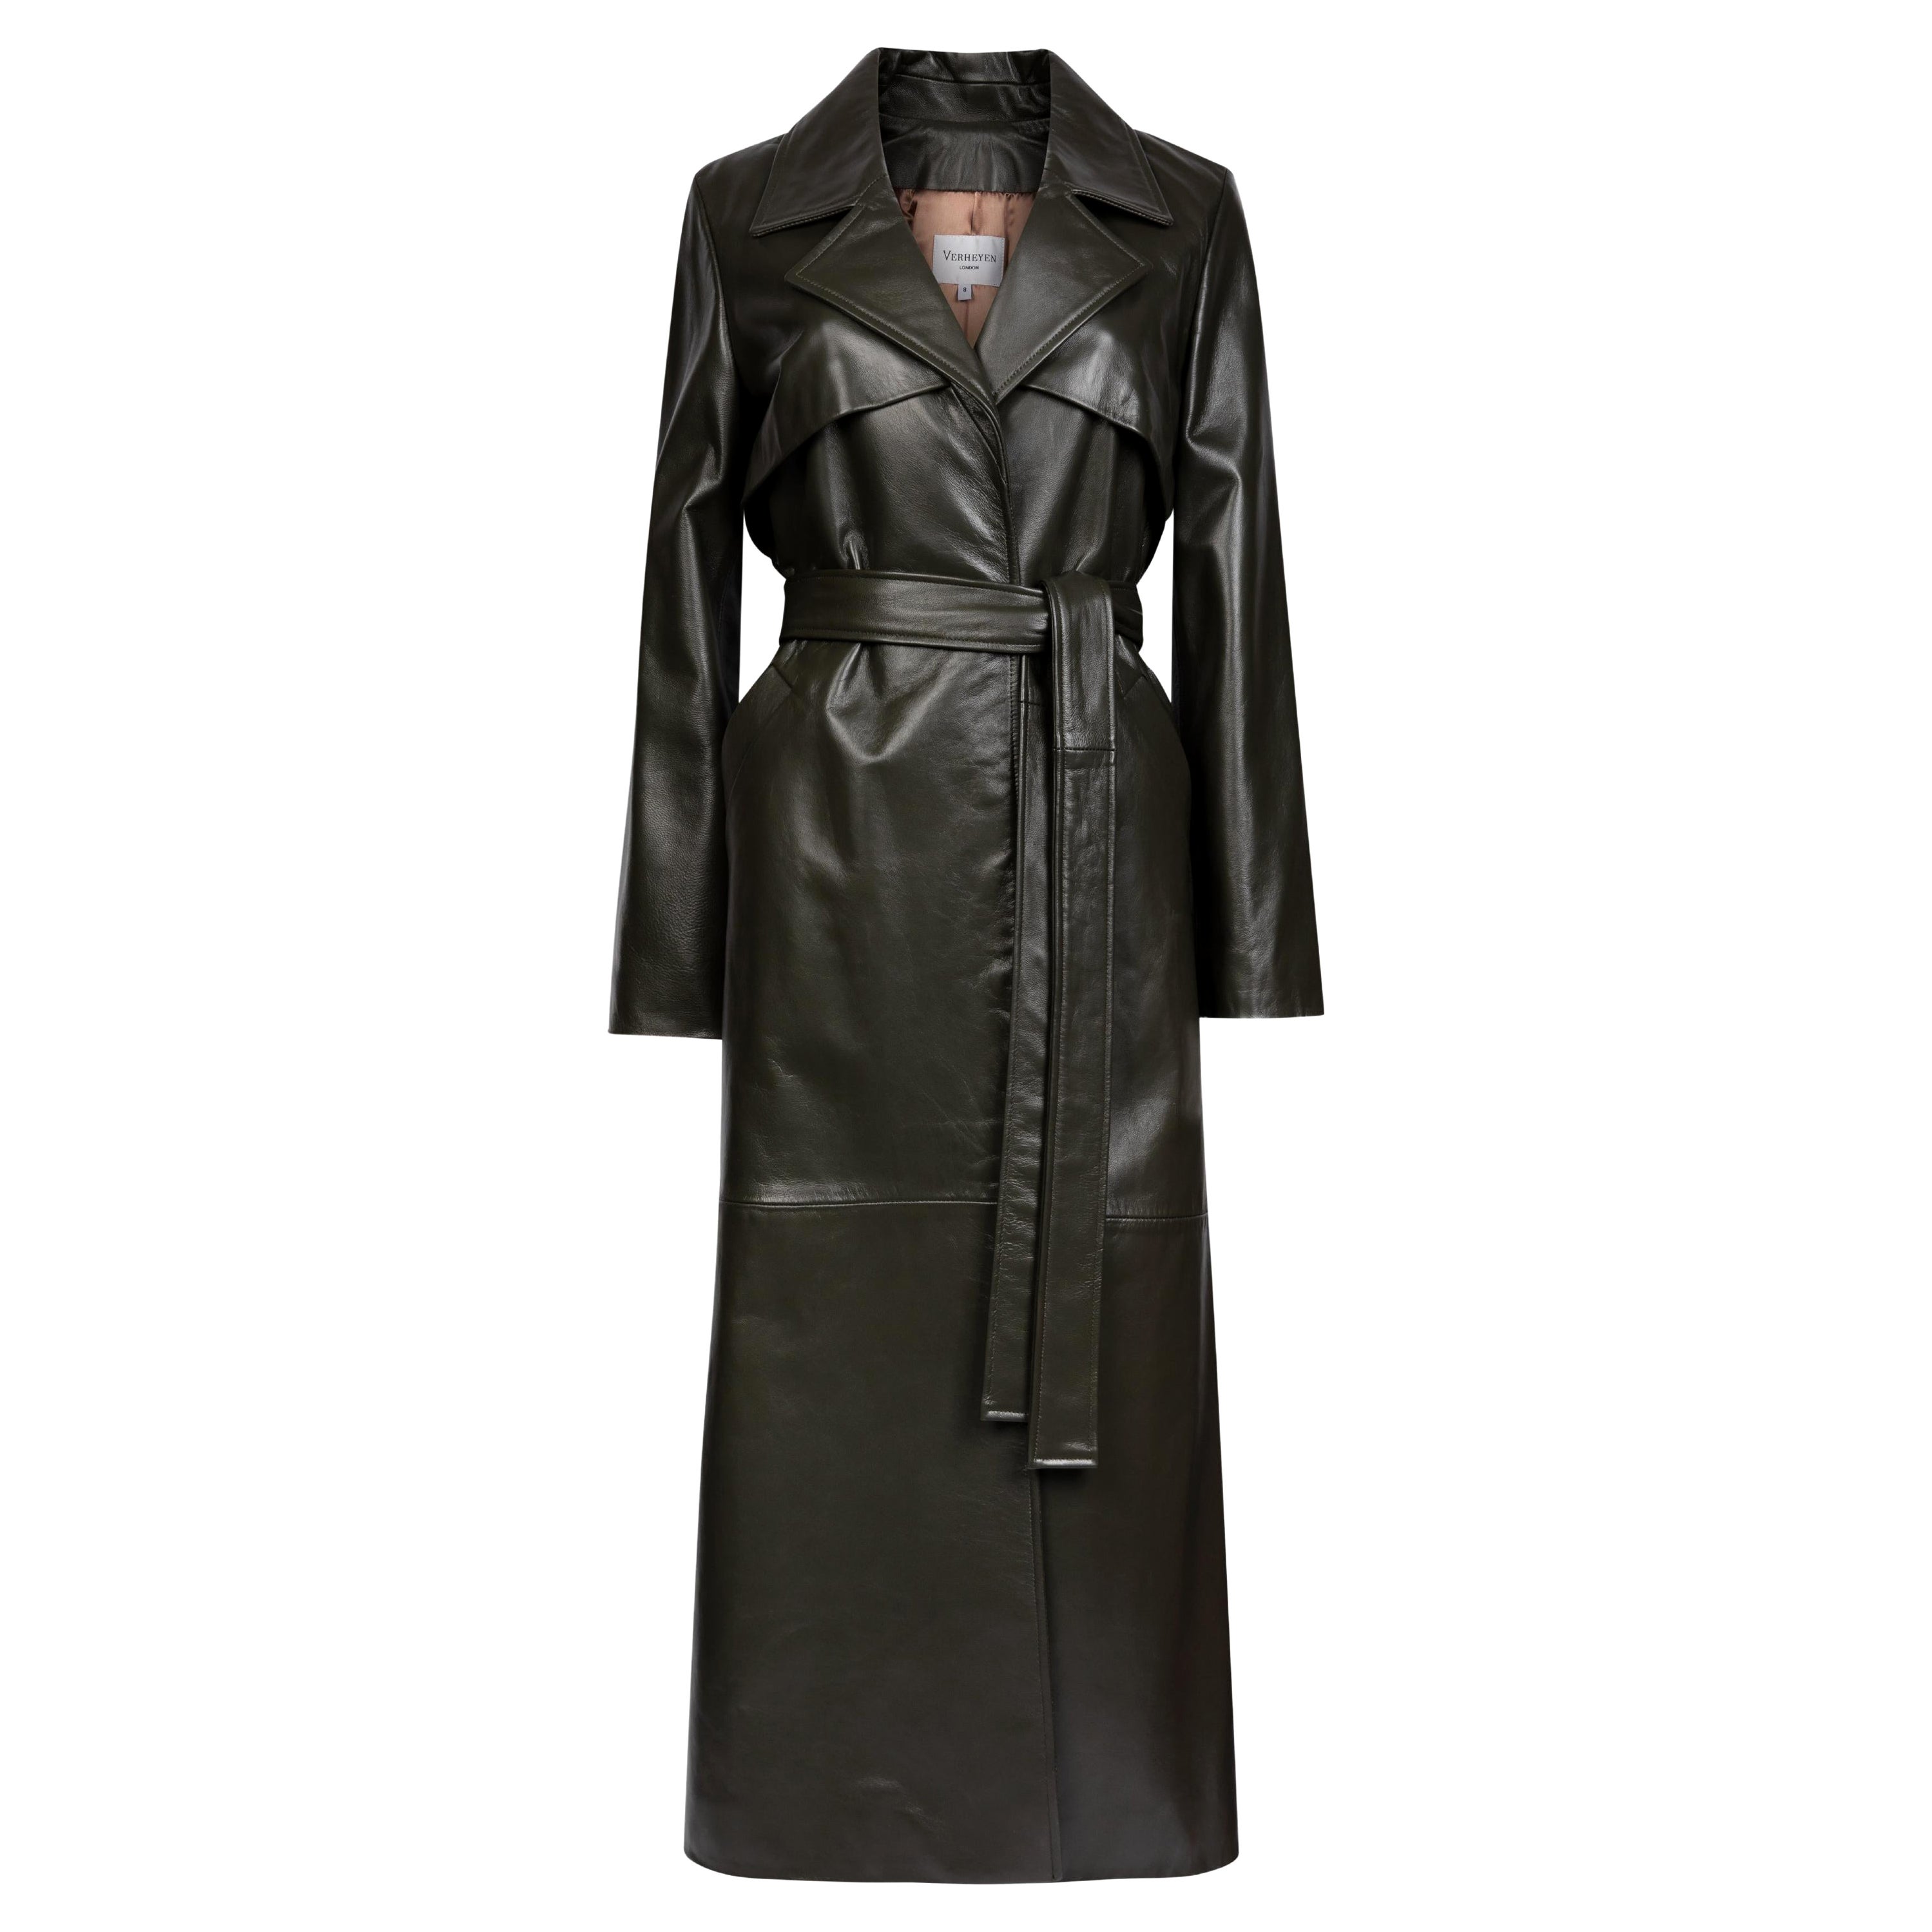 Verheyen London Leather Trench Coat in Dark Khaki Green - Size uk 16 For Sale